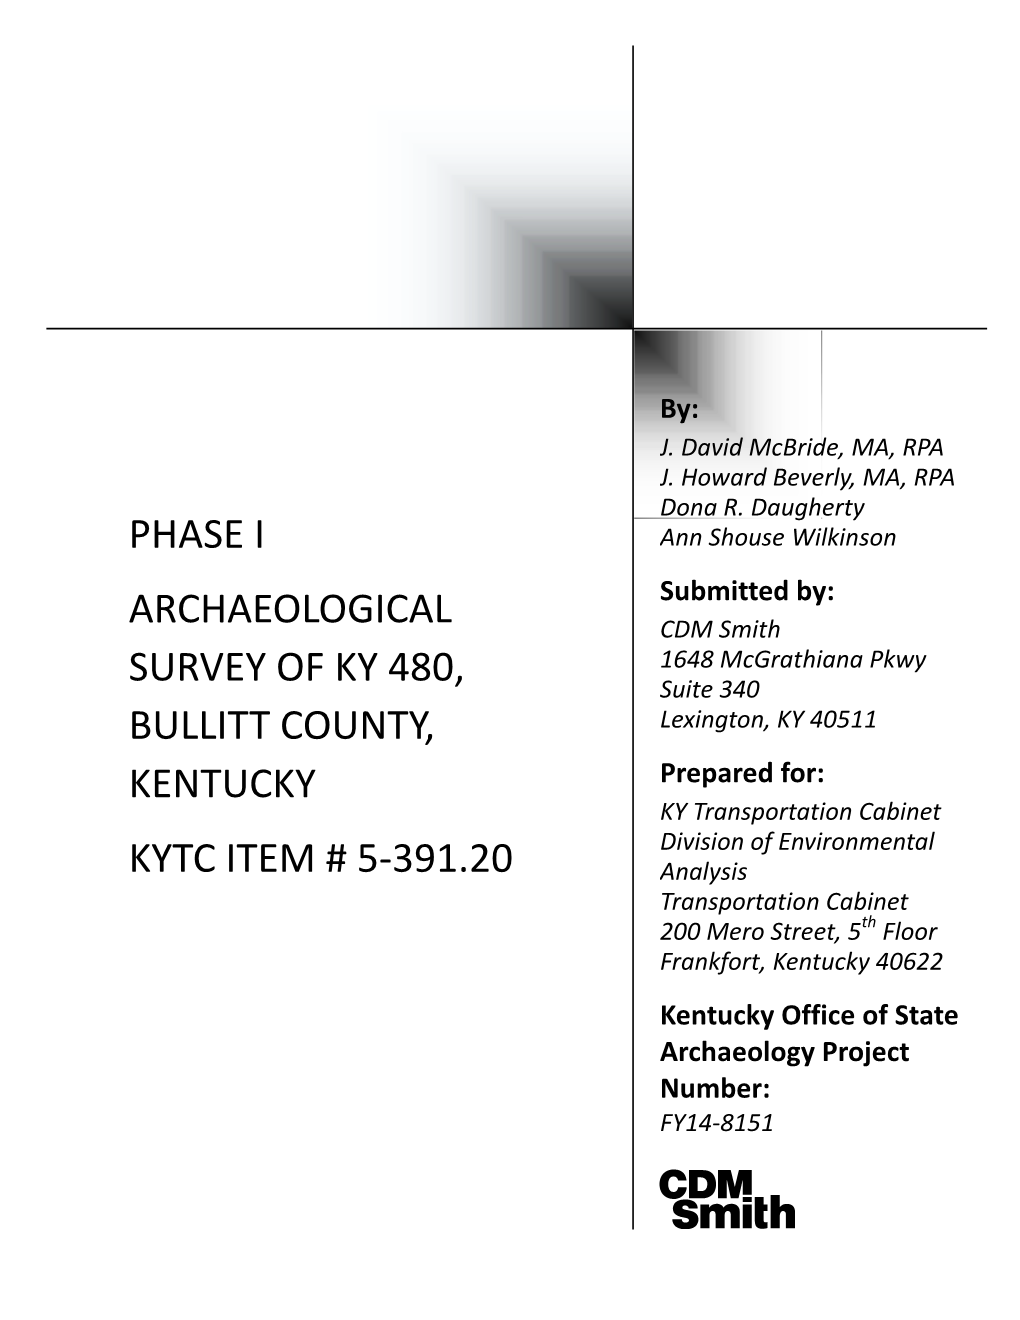 Phase I Archaeological Survey Along KY 480 in Bullitt County, Kentucky